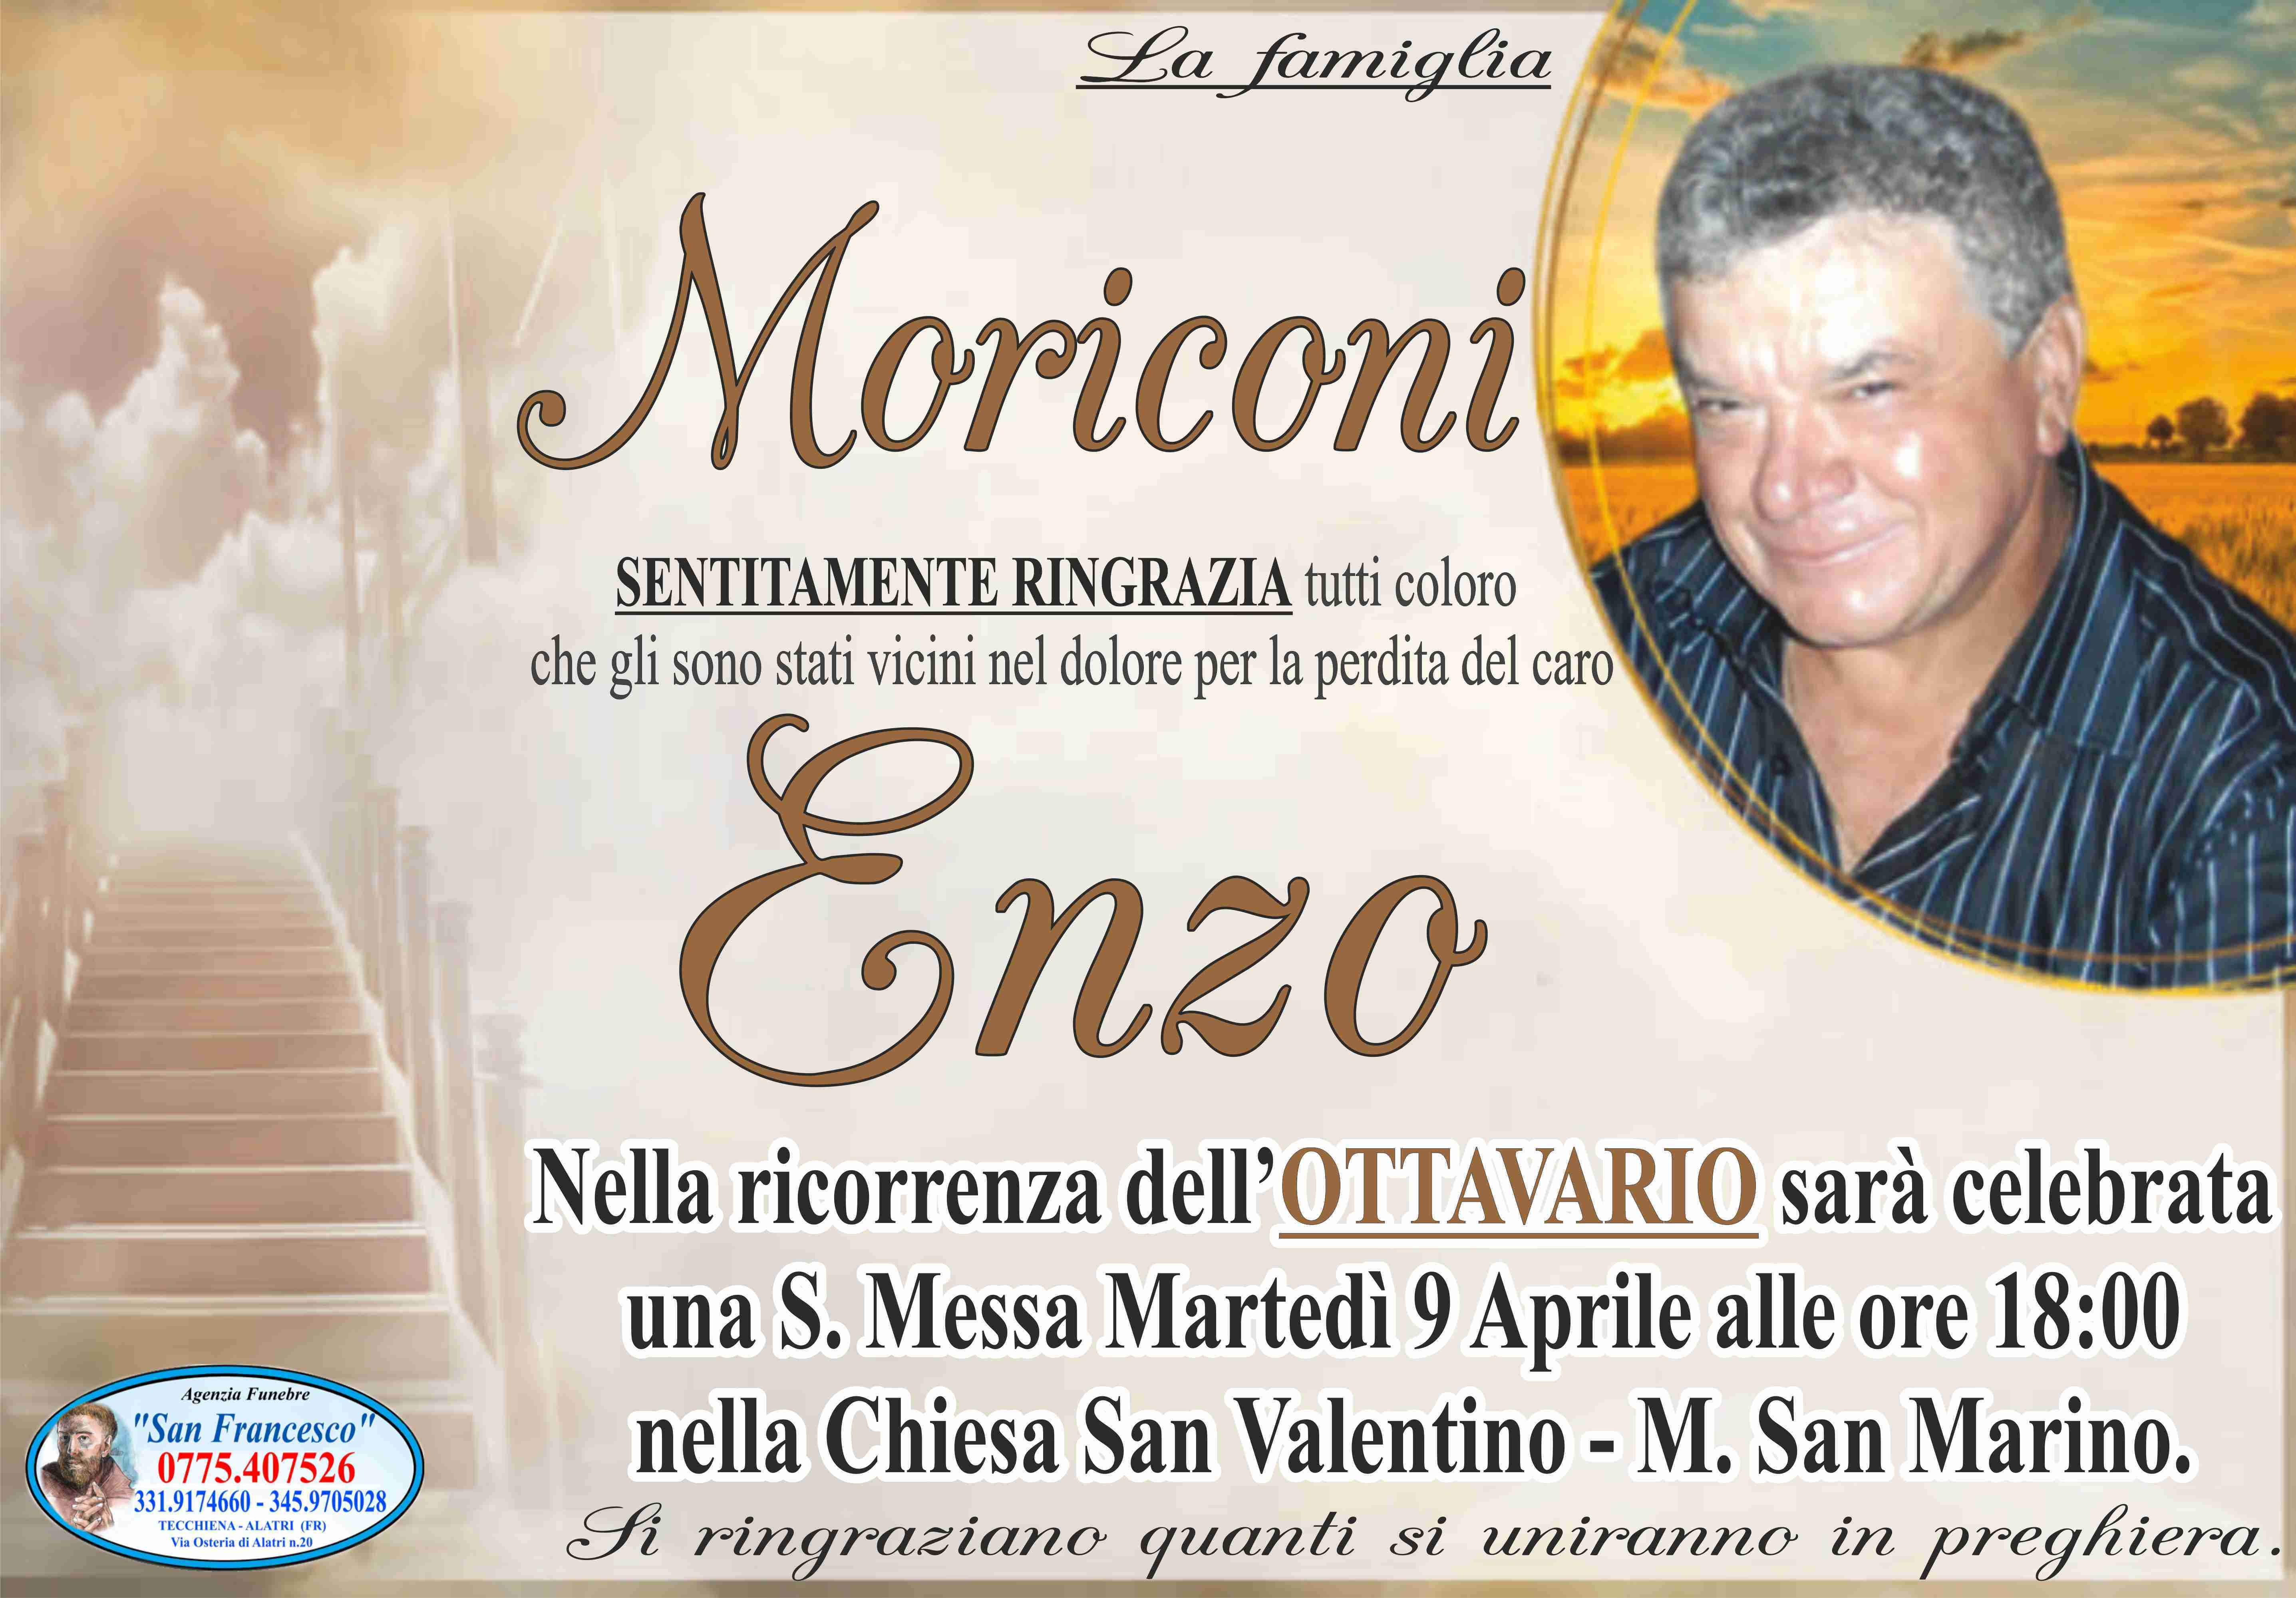 Enzo Moriconi